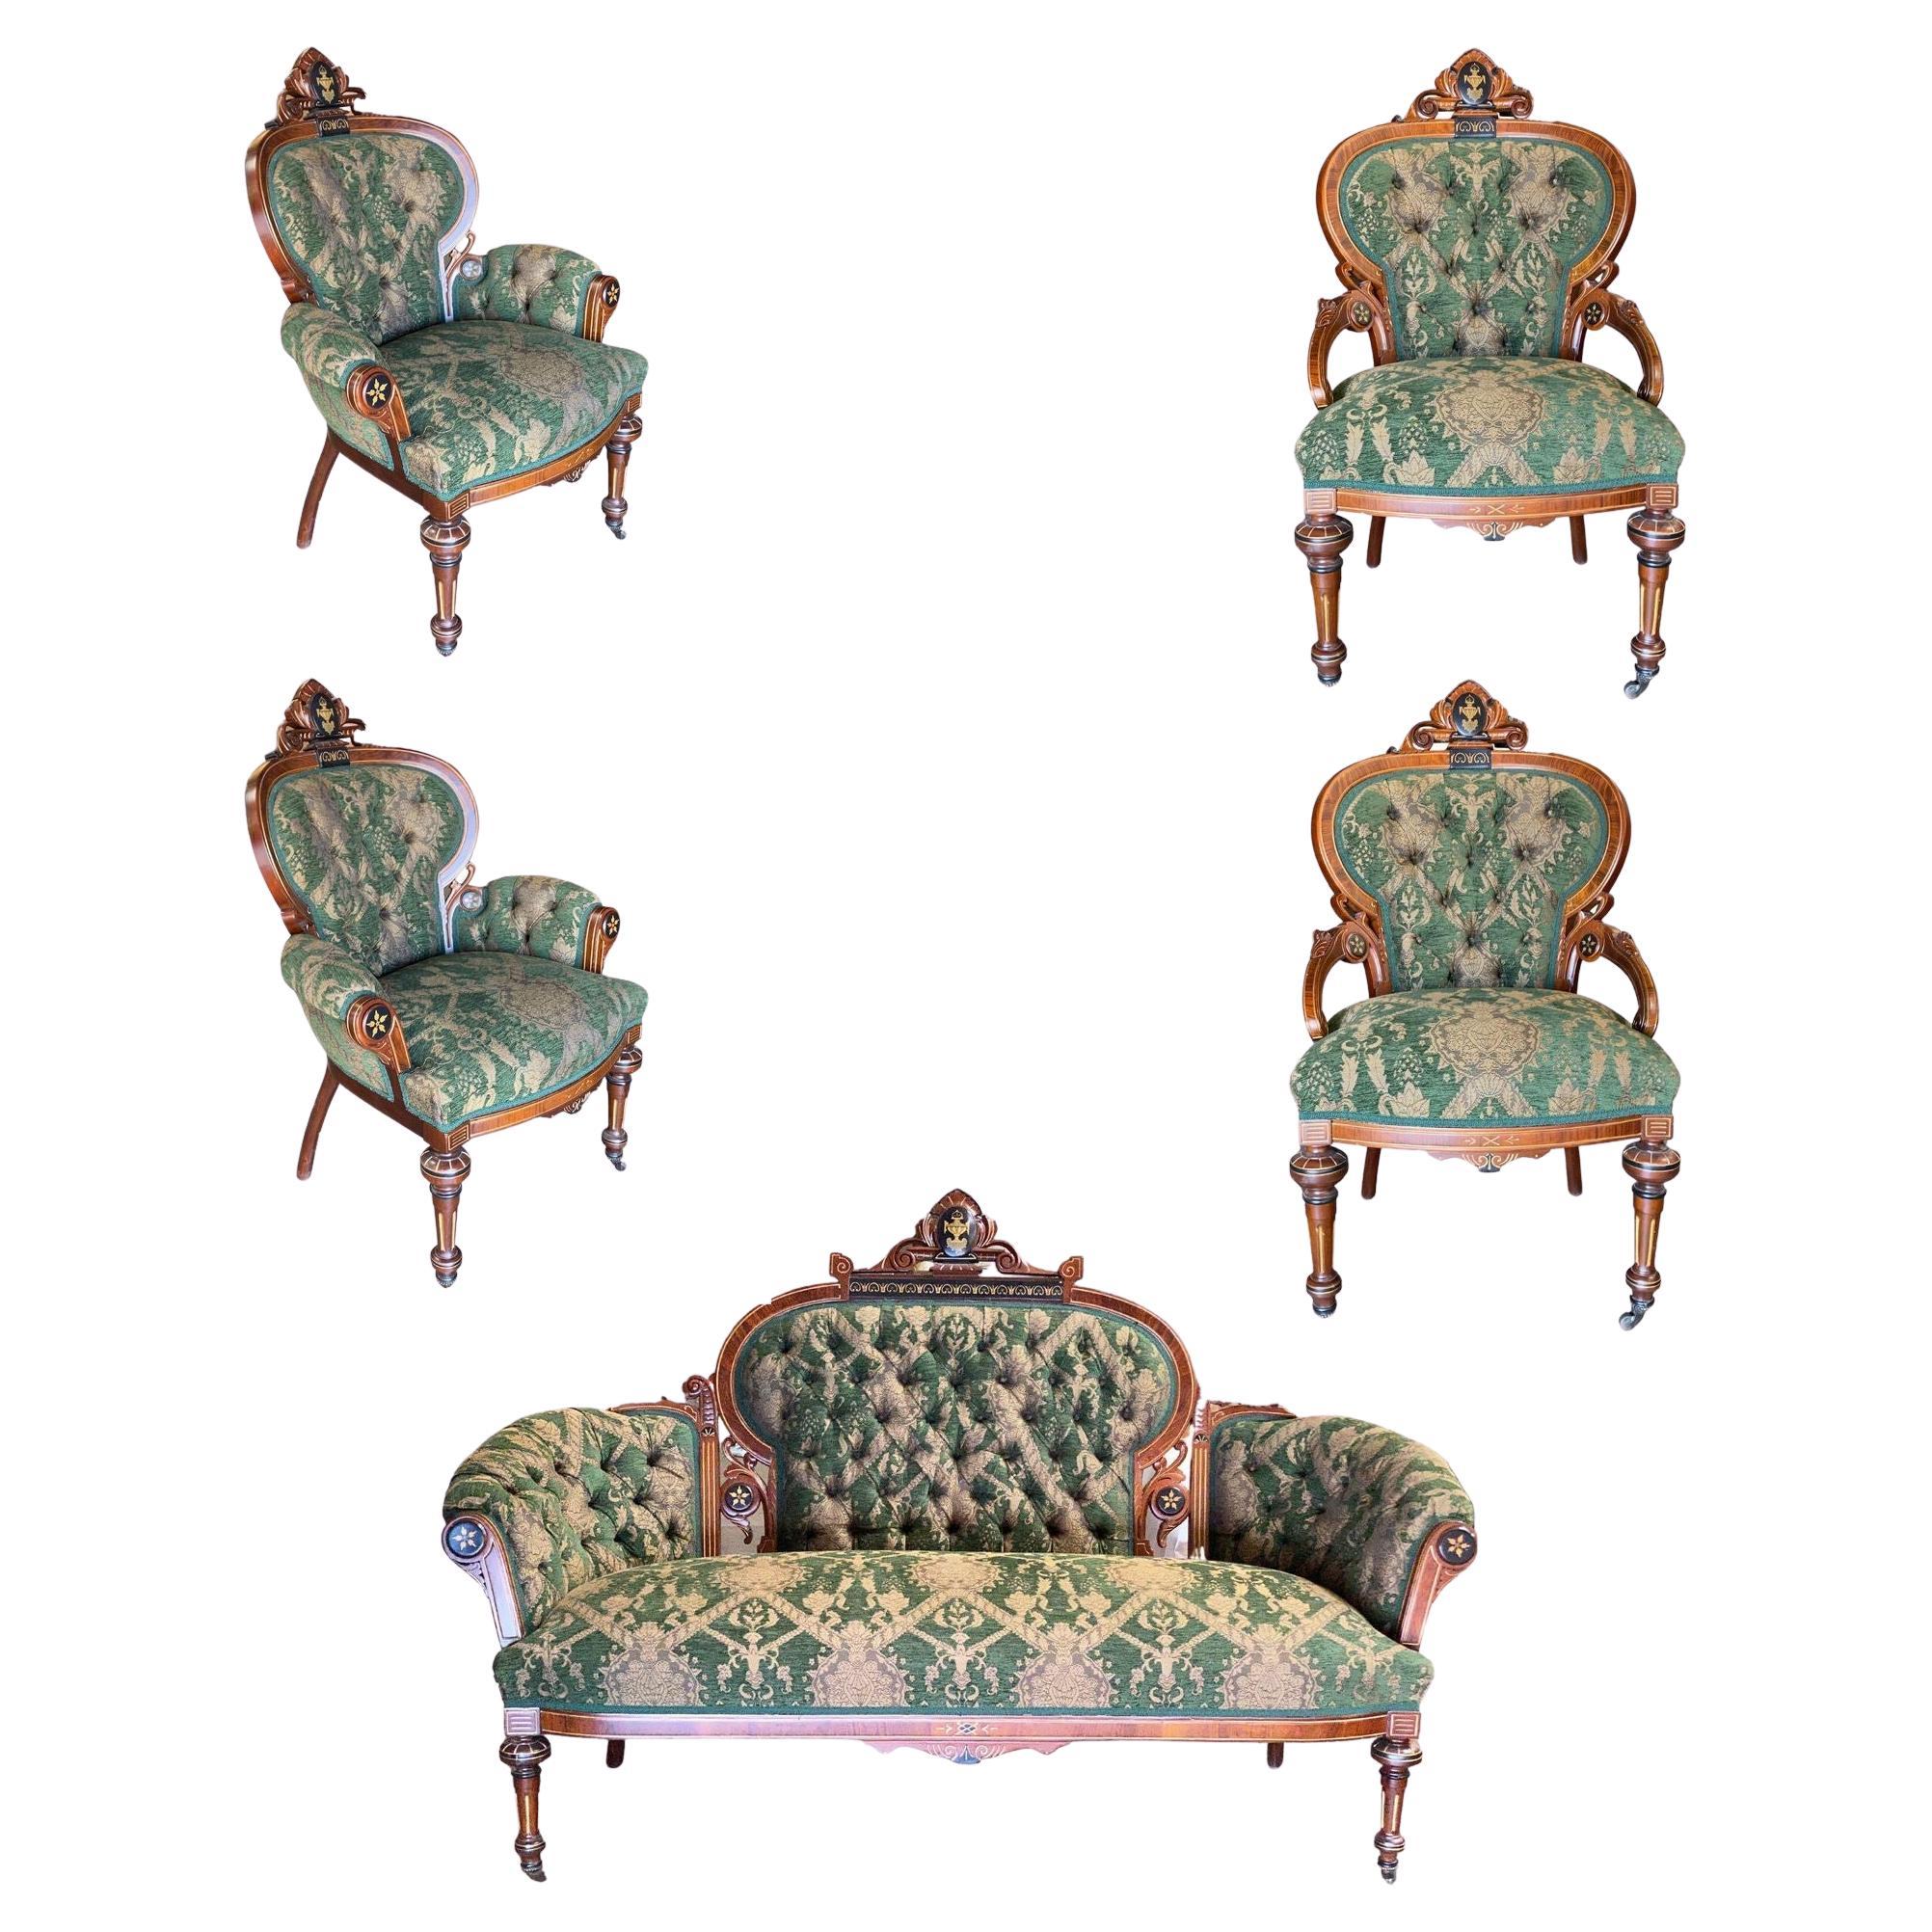 Amerikanisches spätviktorianisches Renaissance-Revival-Sofa & Stuhl-Set